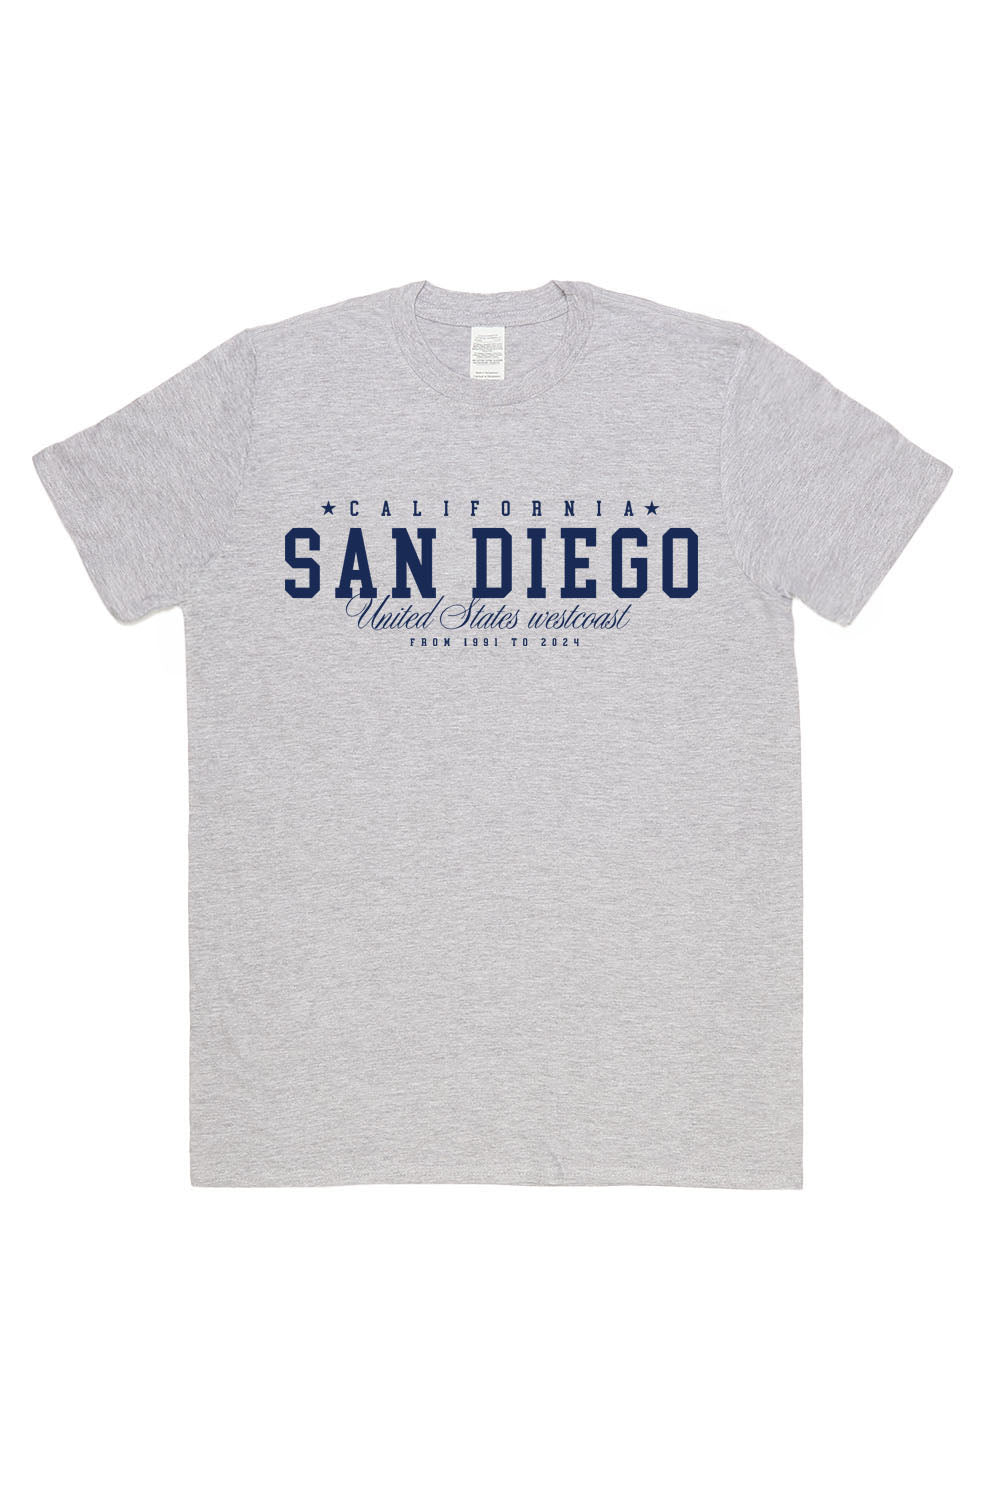 San Diego T-Shirt in Ash Grey (Custom Packs)